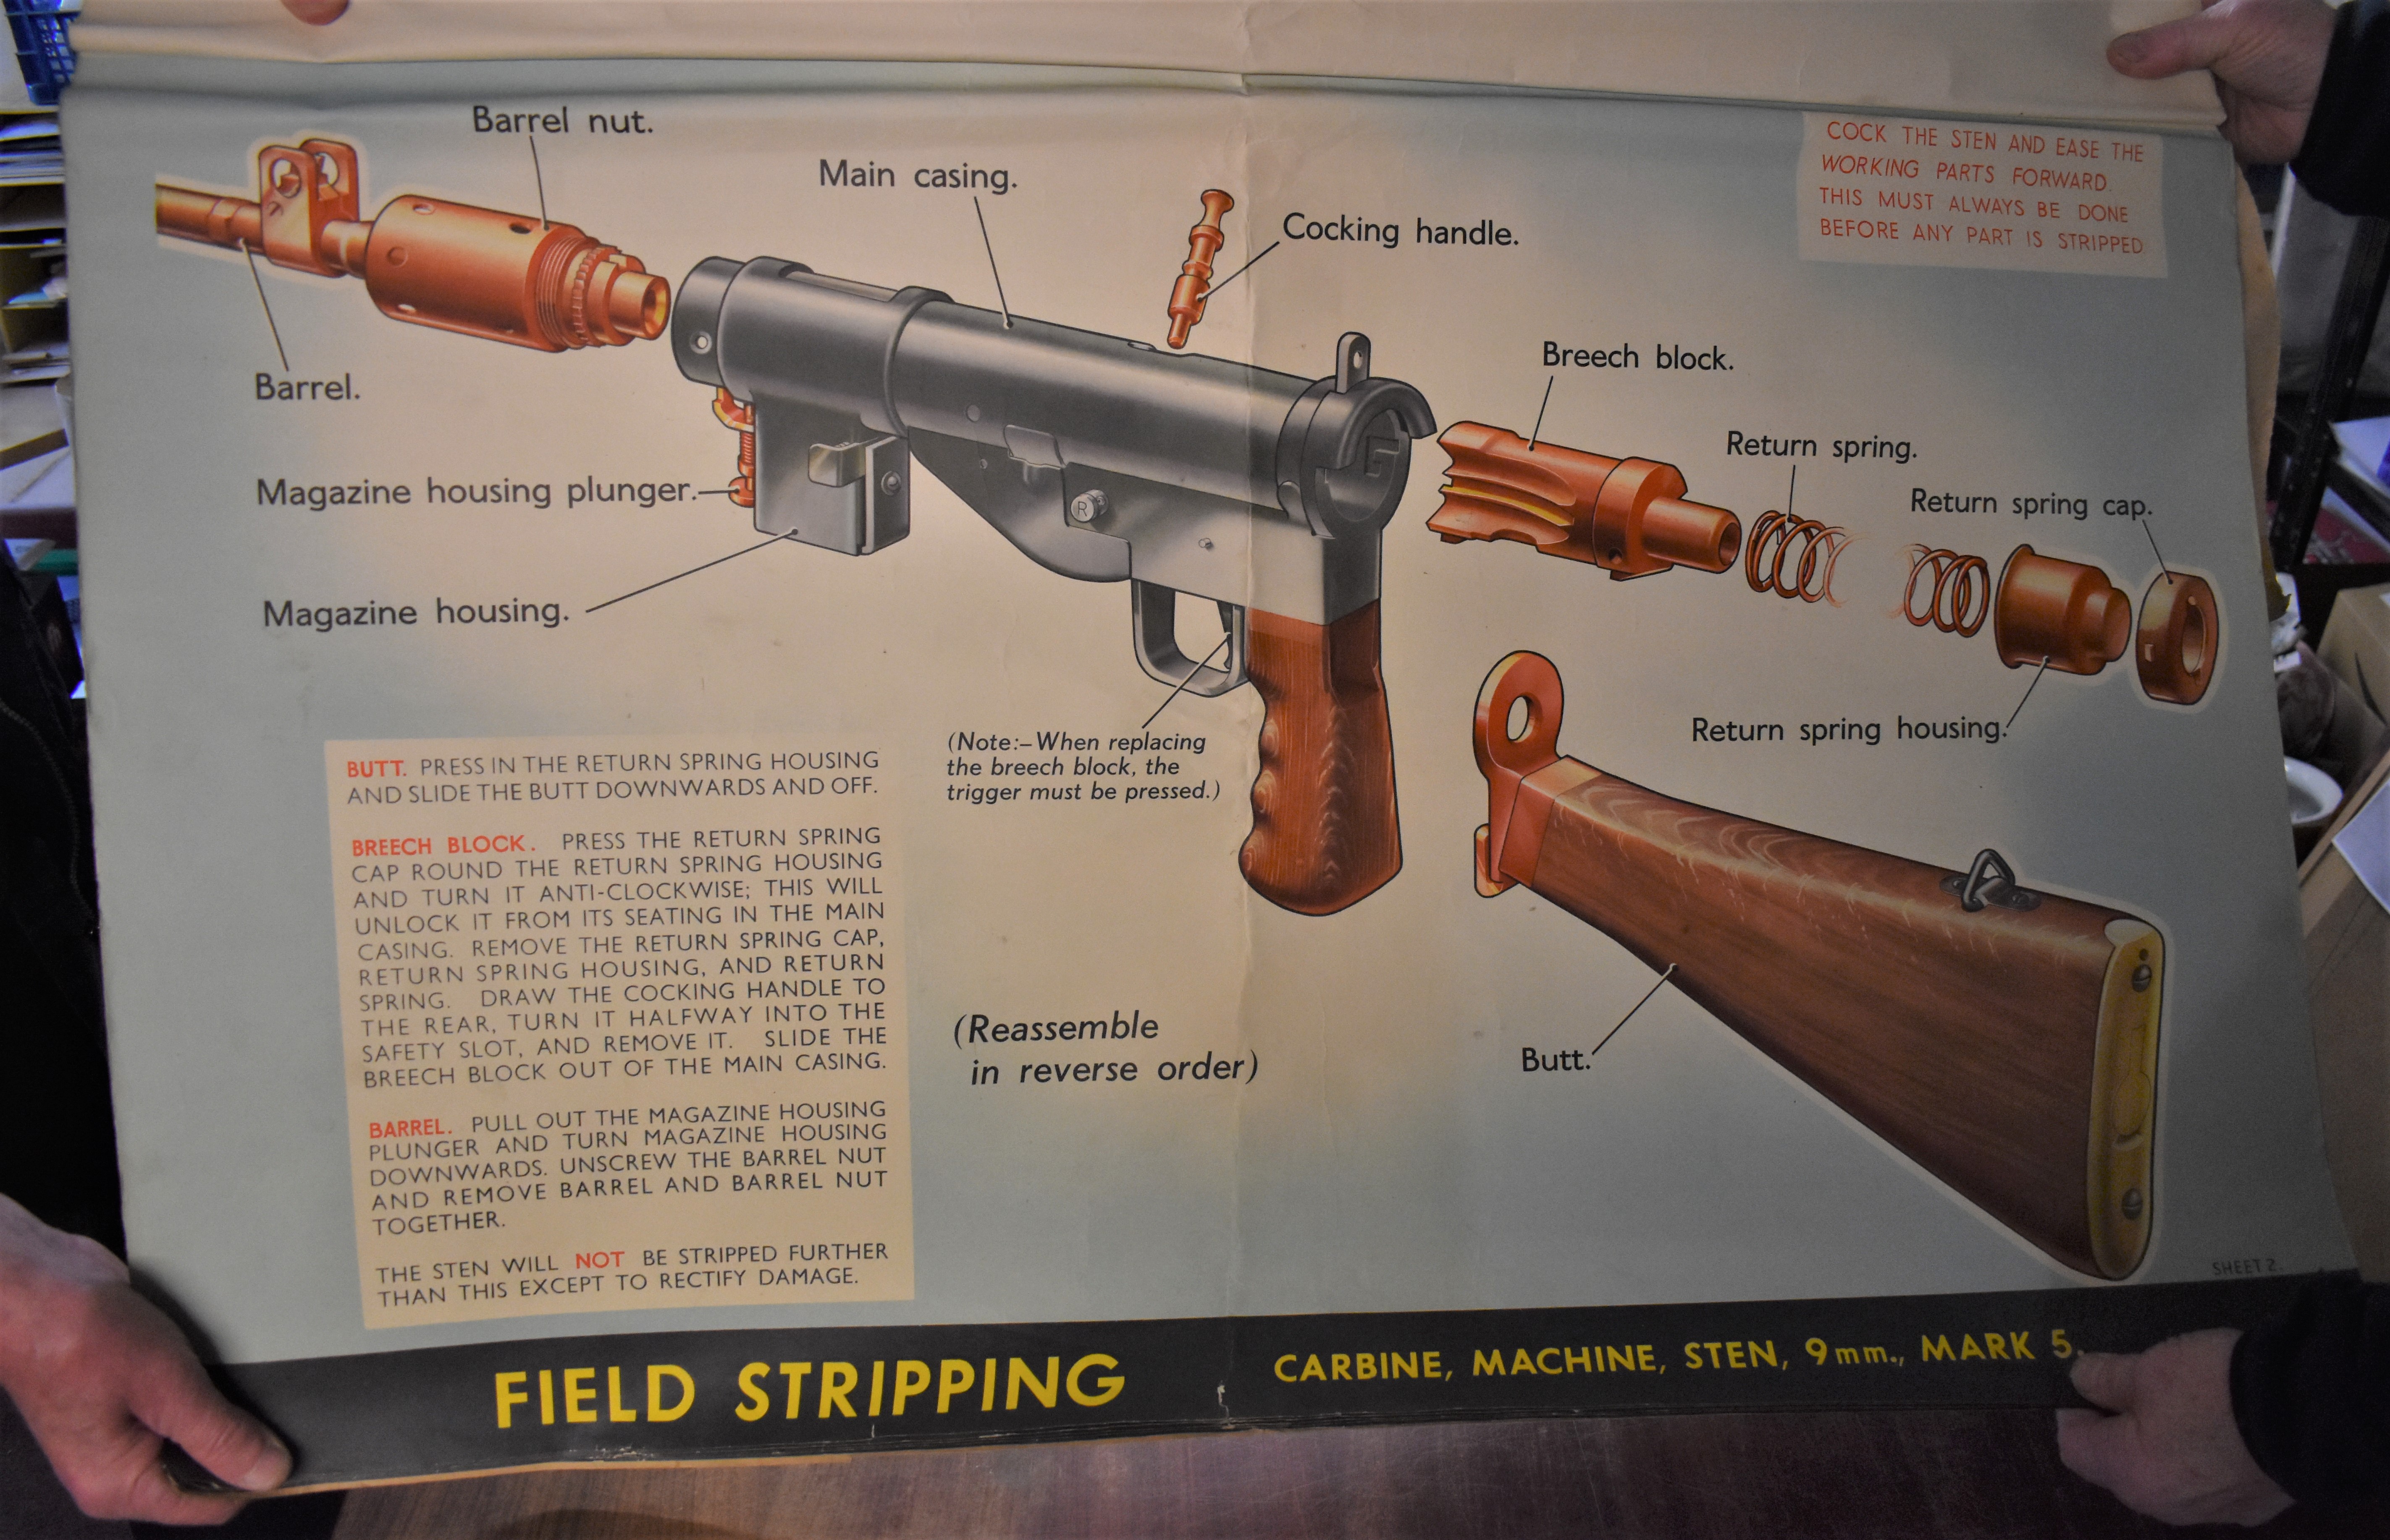 British 1946 dated Sten MK 5 Flip Chart, reads "Weapons training poster No.1 - Carbine, Machine, 9mm - Image 4 of 5